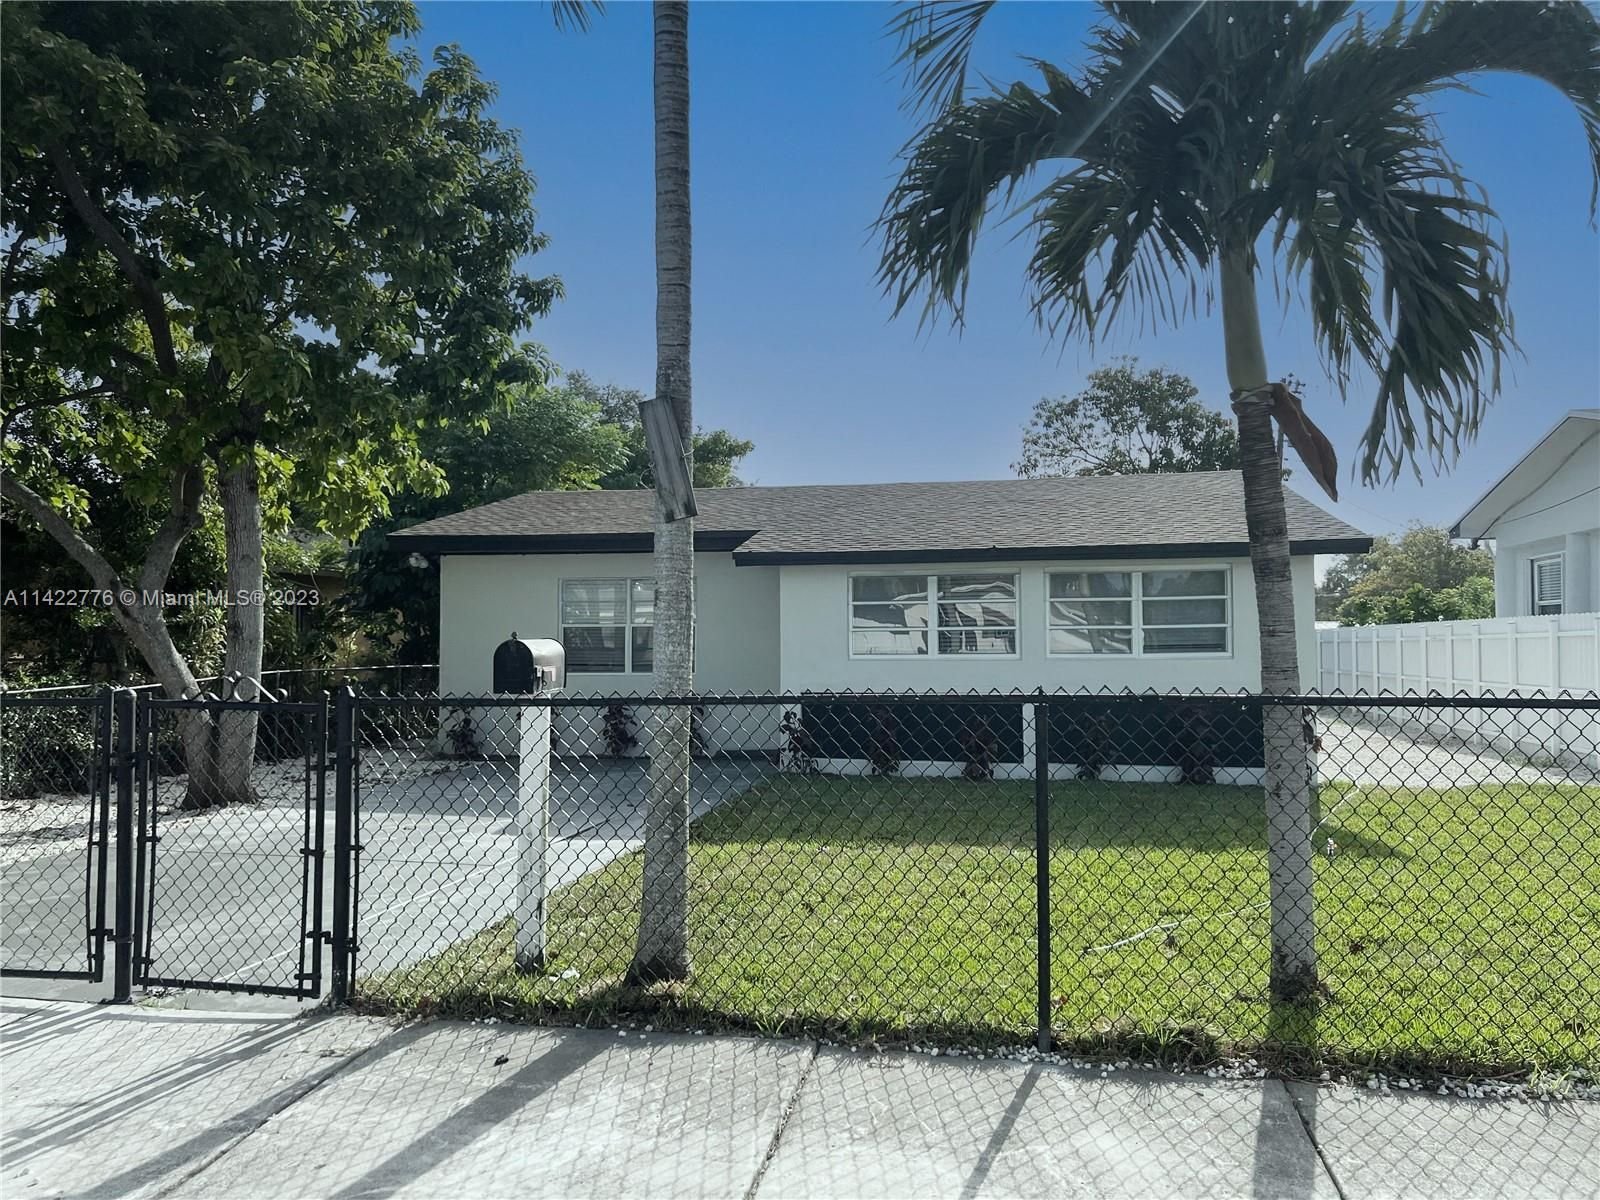 Real estate property located at 7754 10th Ave, Miami-Dade County, Miami, FL